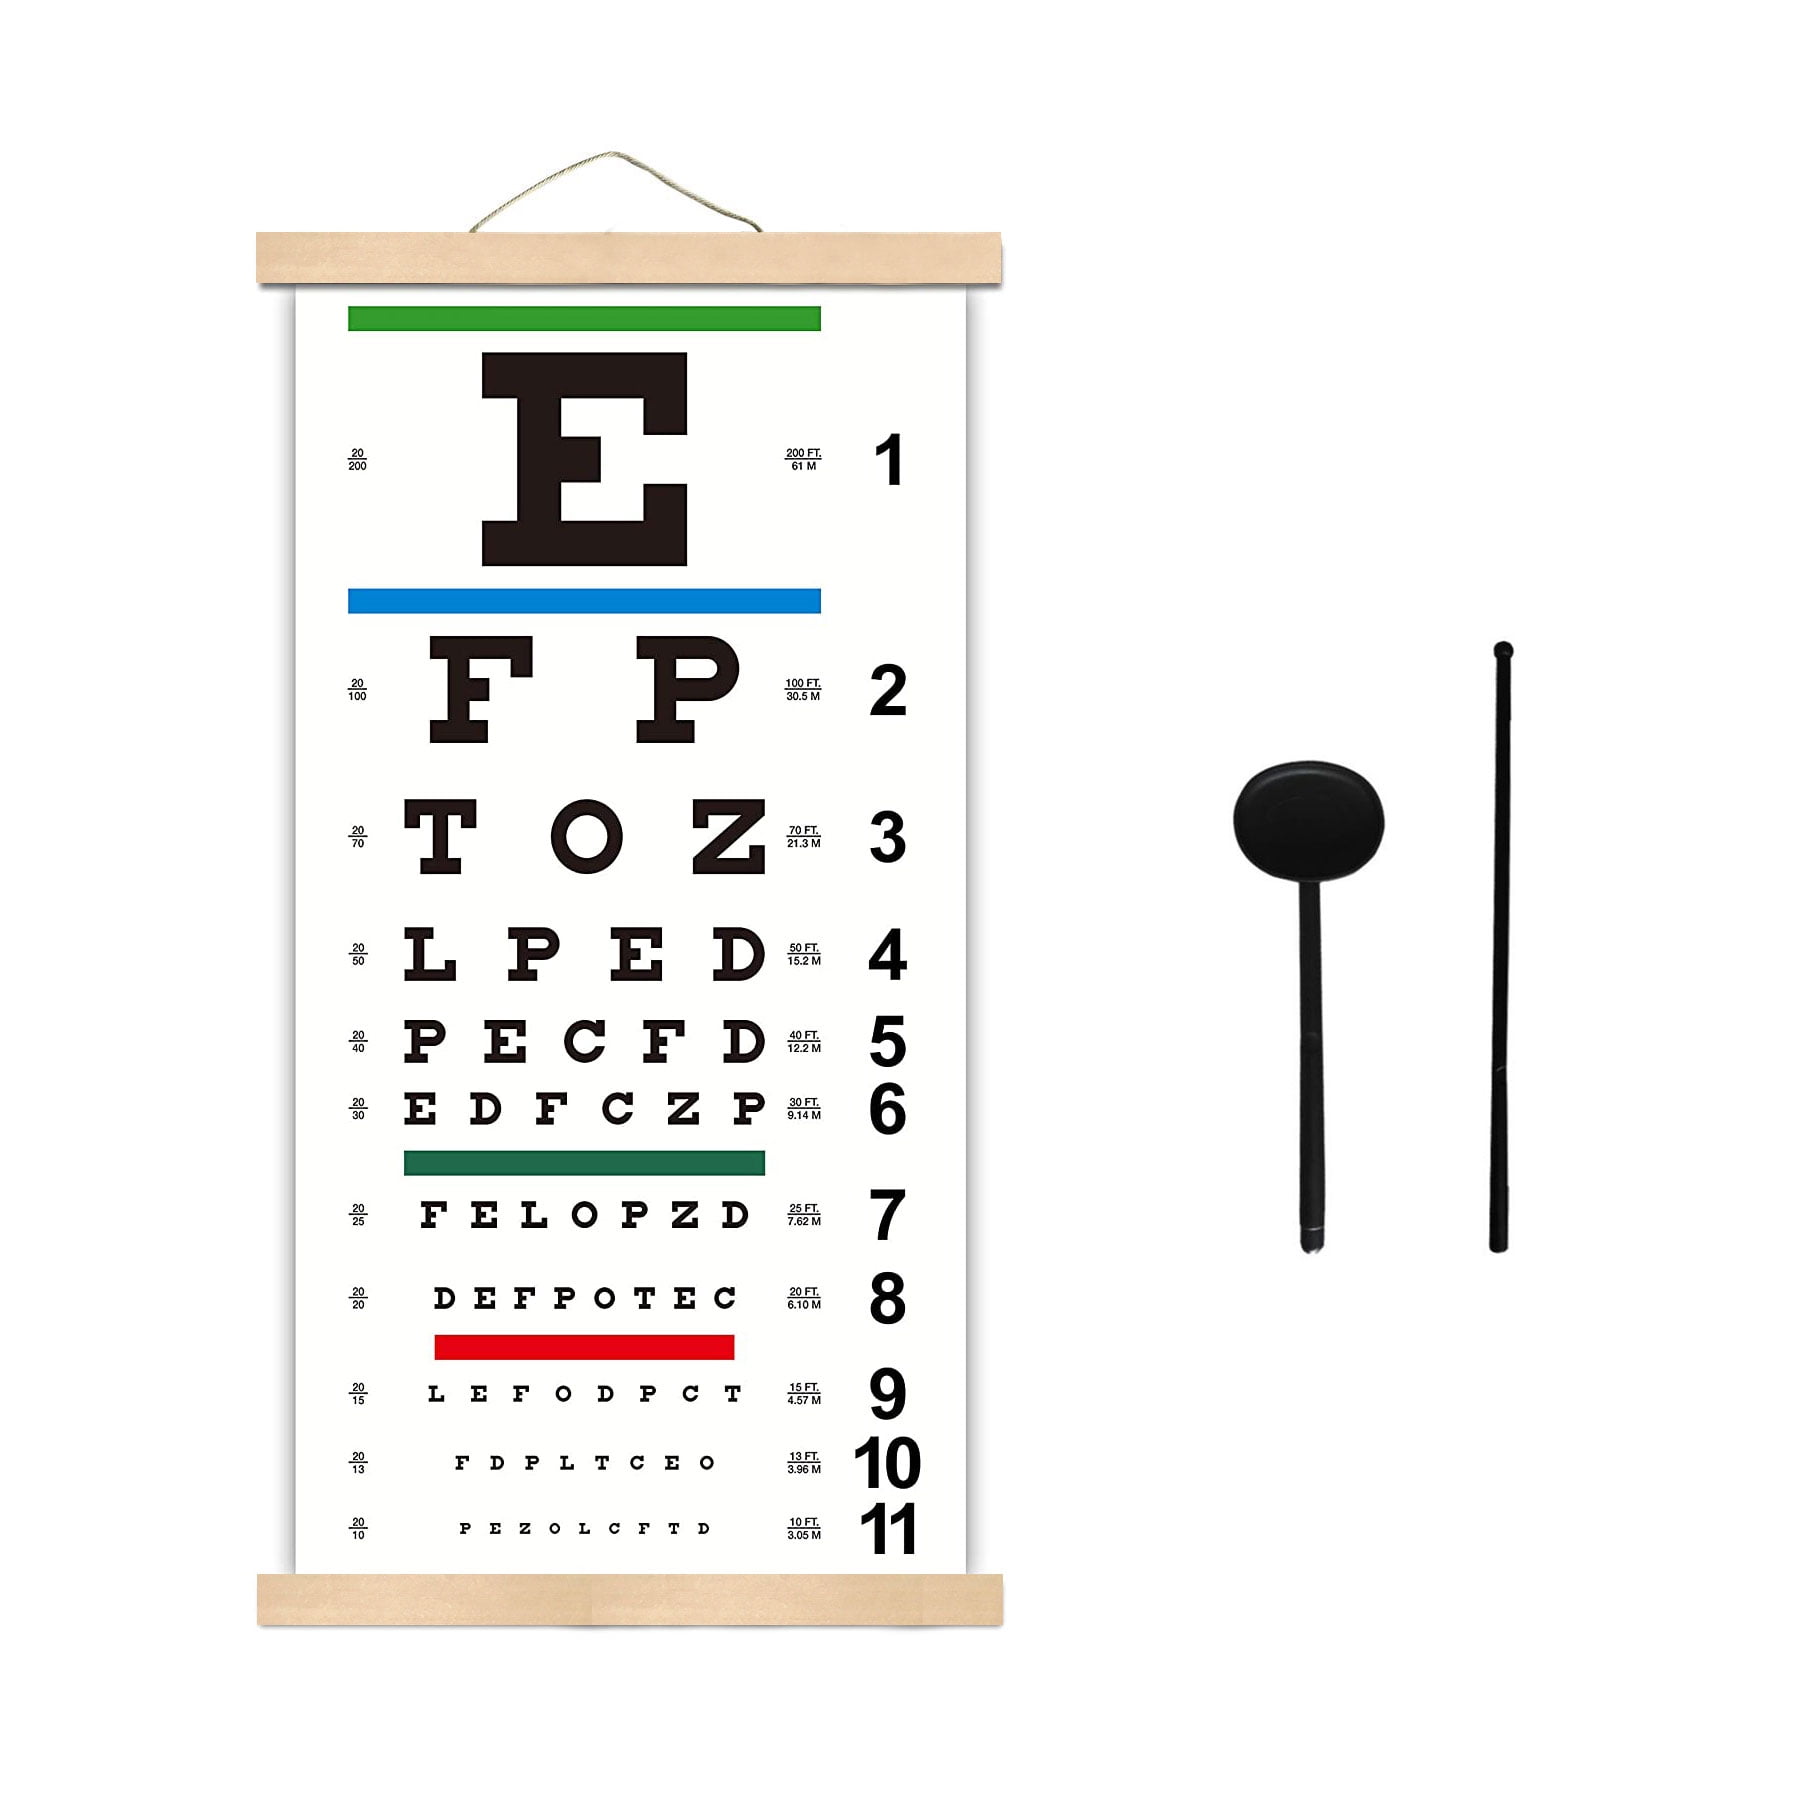 Eye Exam Chart Printout